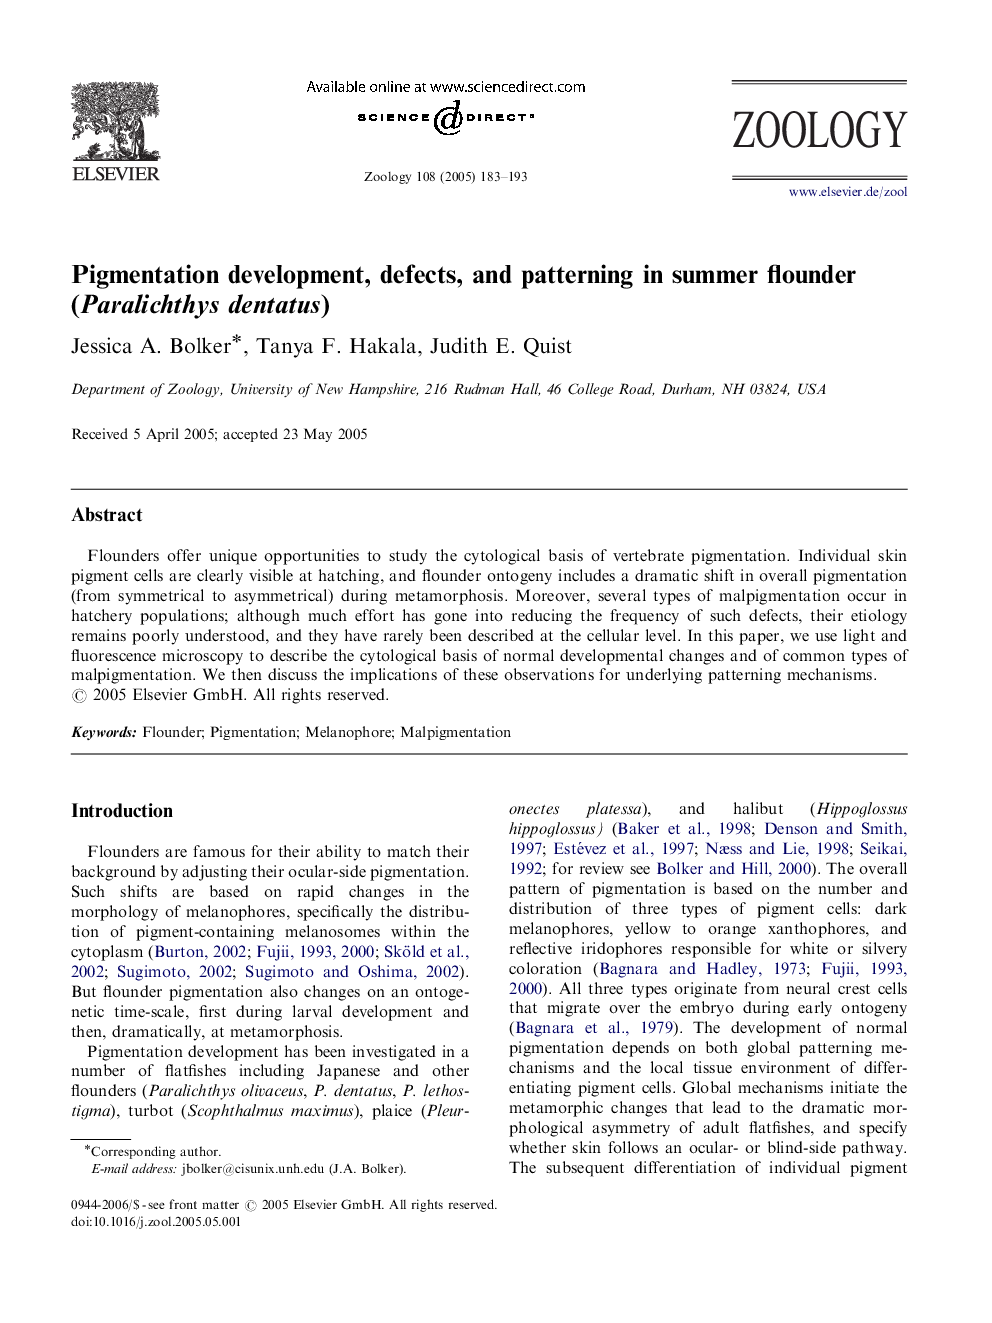 Pigmentation development, defects, and patterning in summer flounder (Paralichthys dentatus)